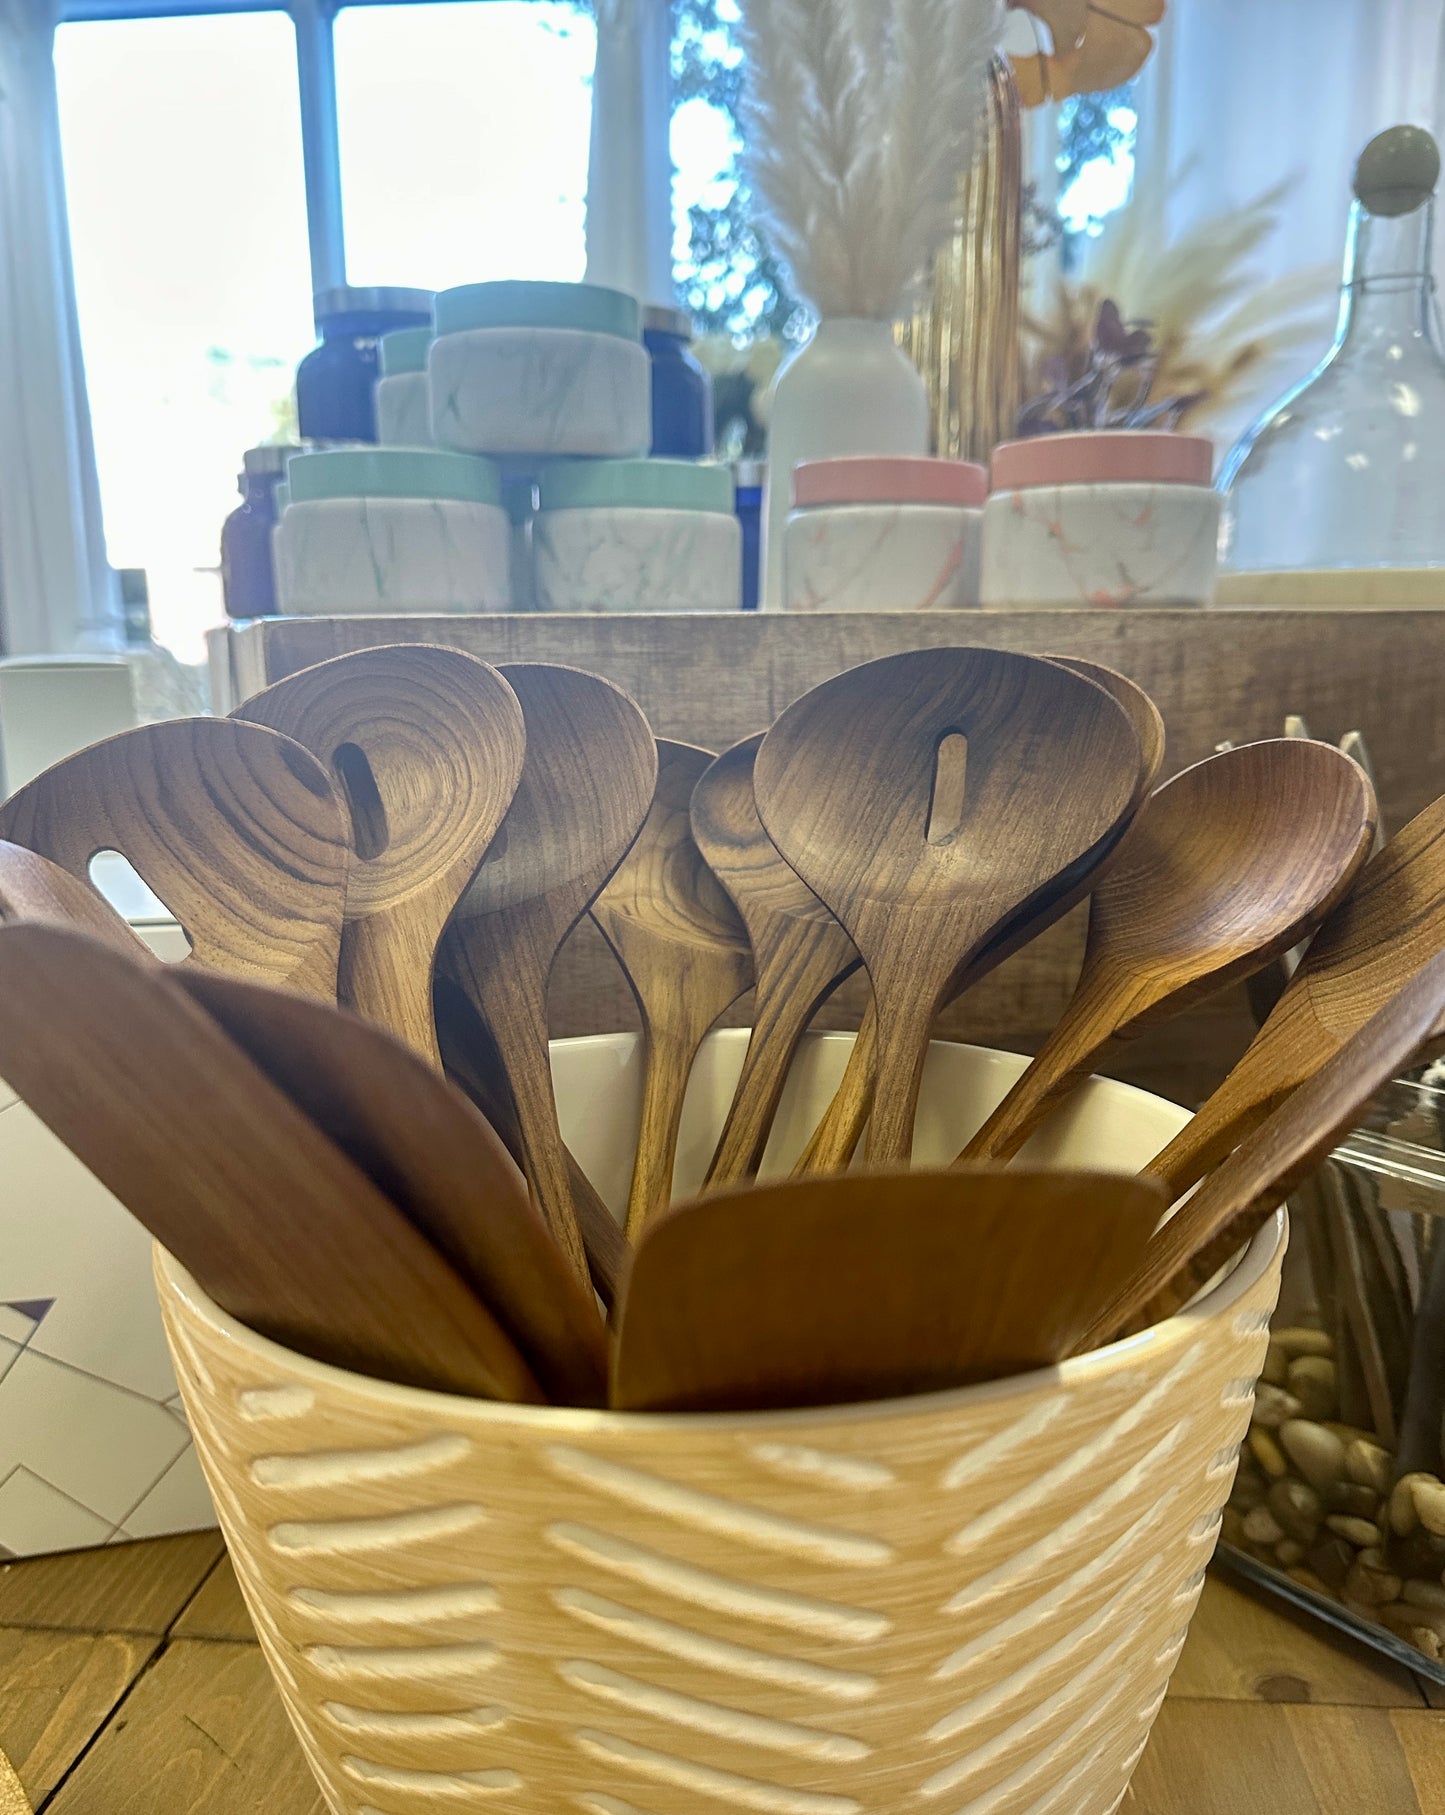 Teak Wooden Spatulas & Spoons- Assorted Styles